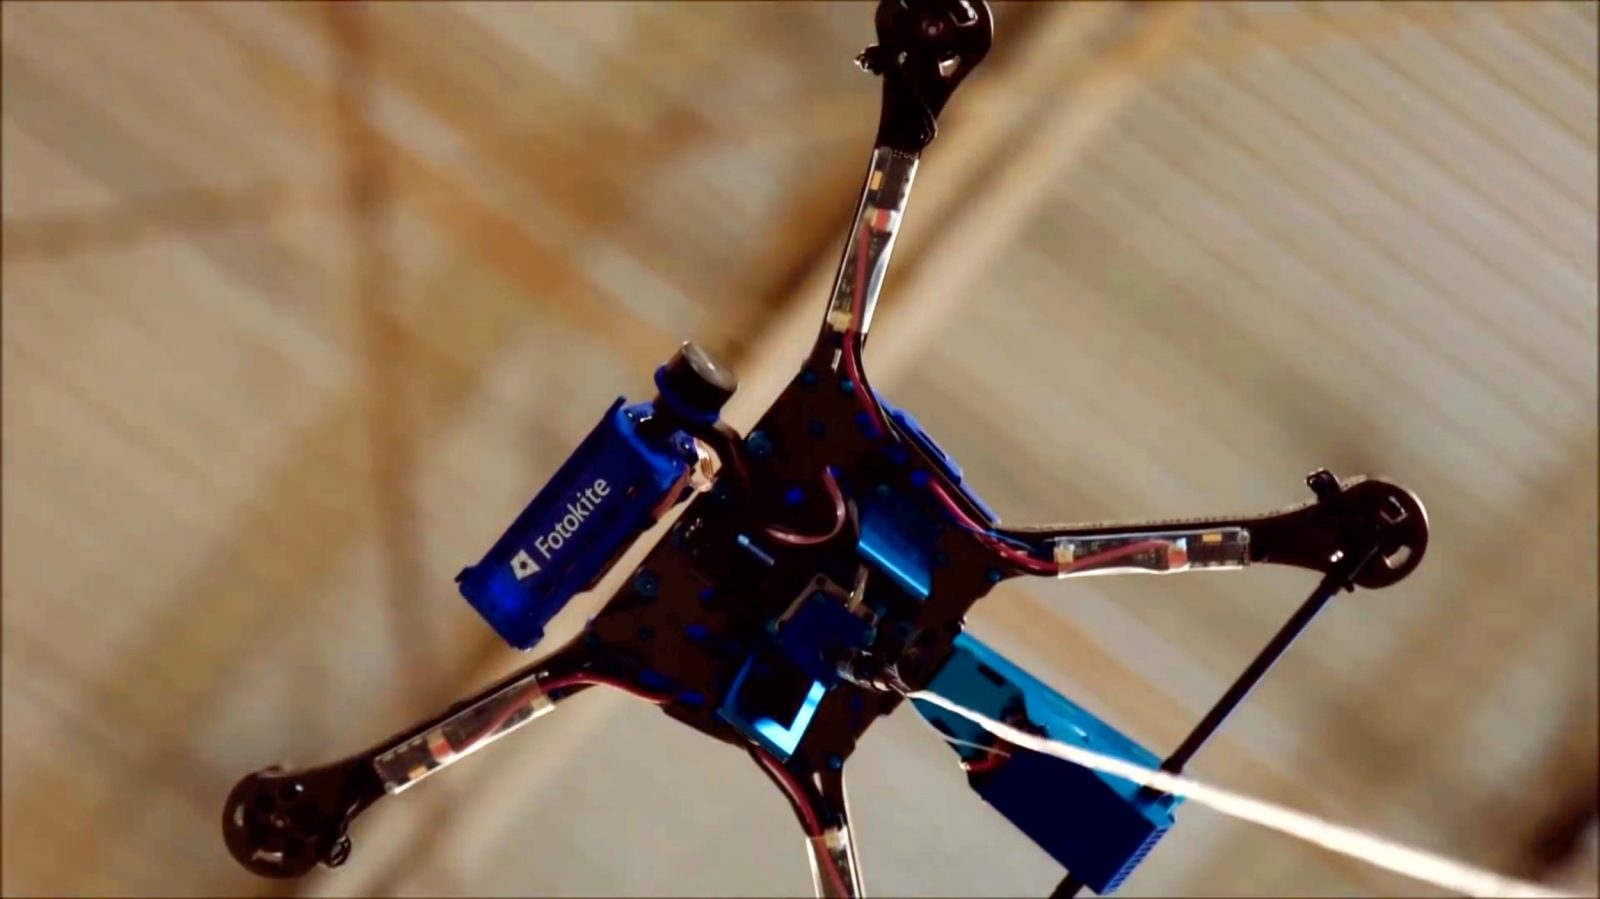 Fotokite takes home $1 million in Genius NY drone competition